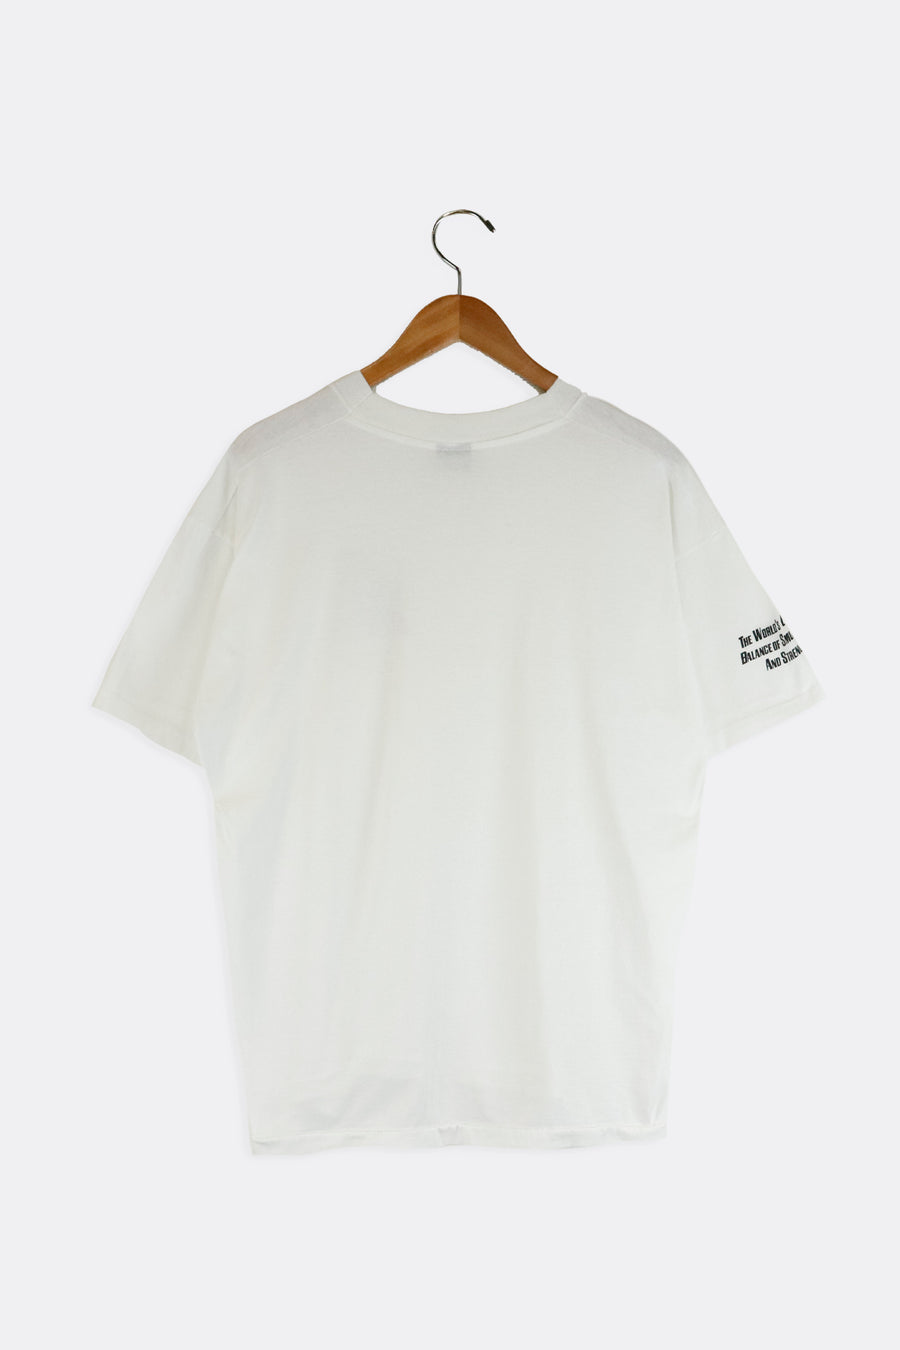 Vintage Labatt Maximum Ice T Shirt Sz XL